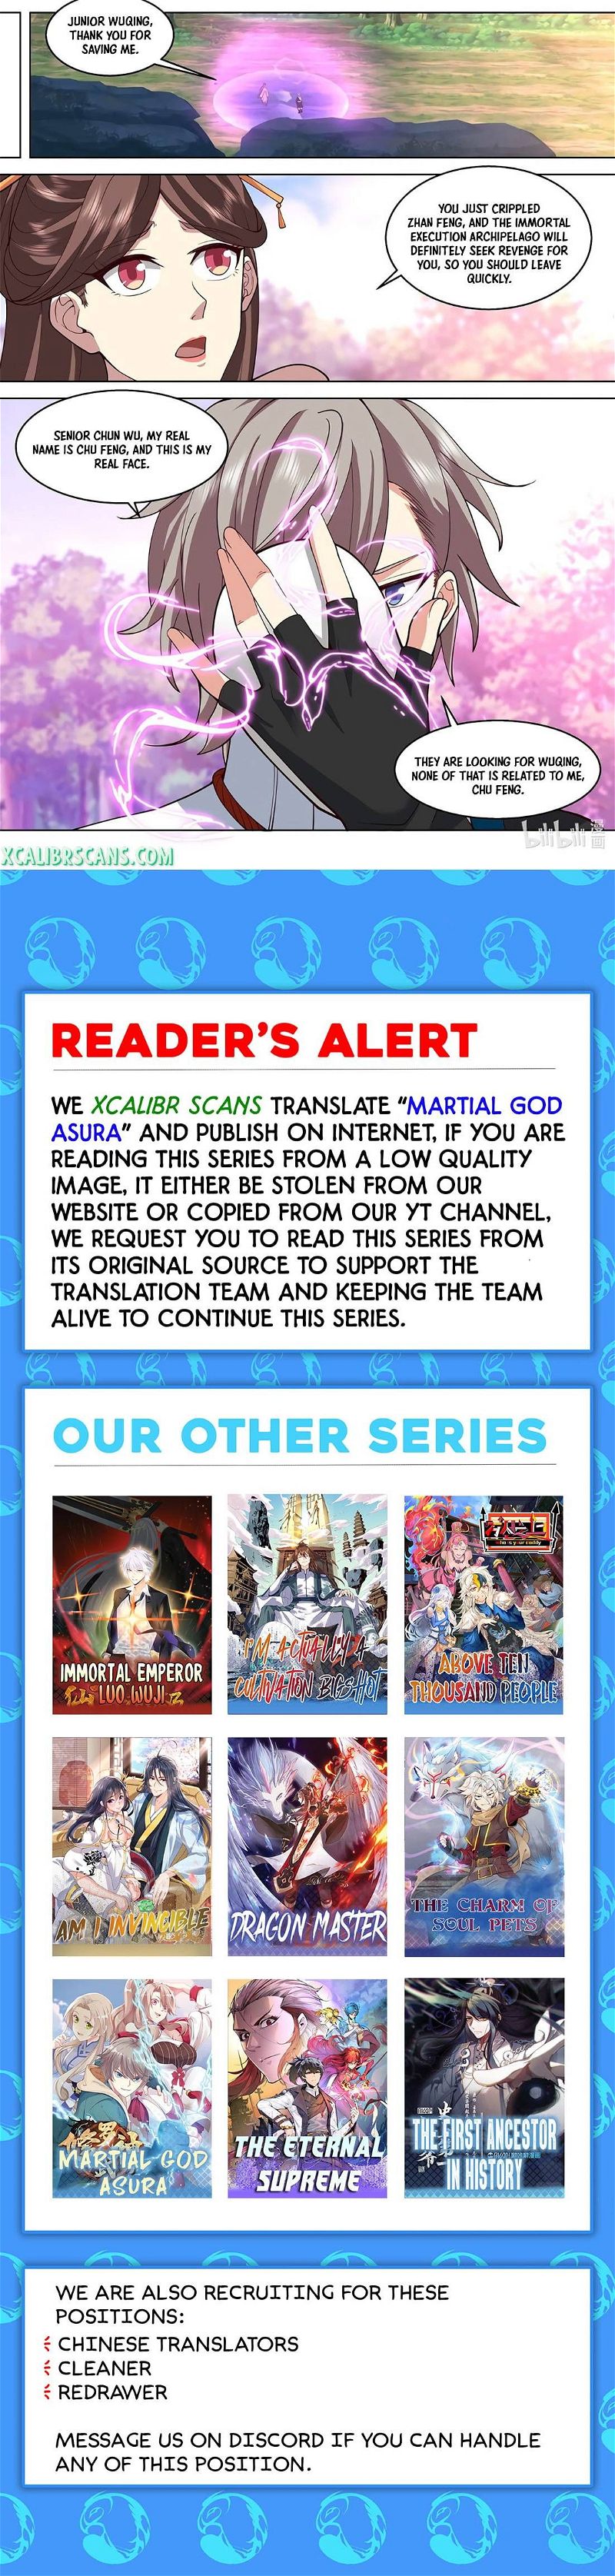 Martial God Asura Chapter 512 page 10